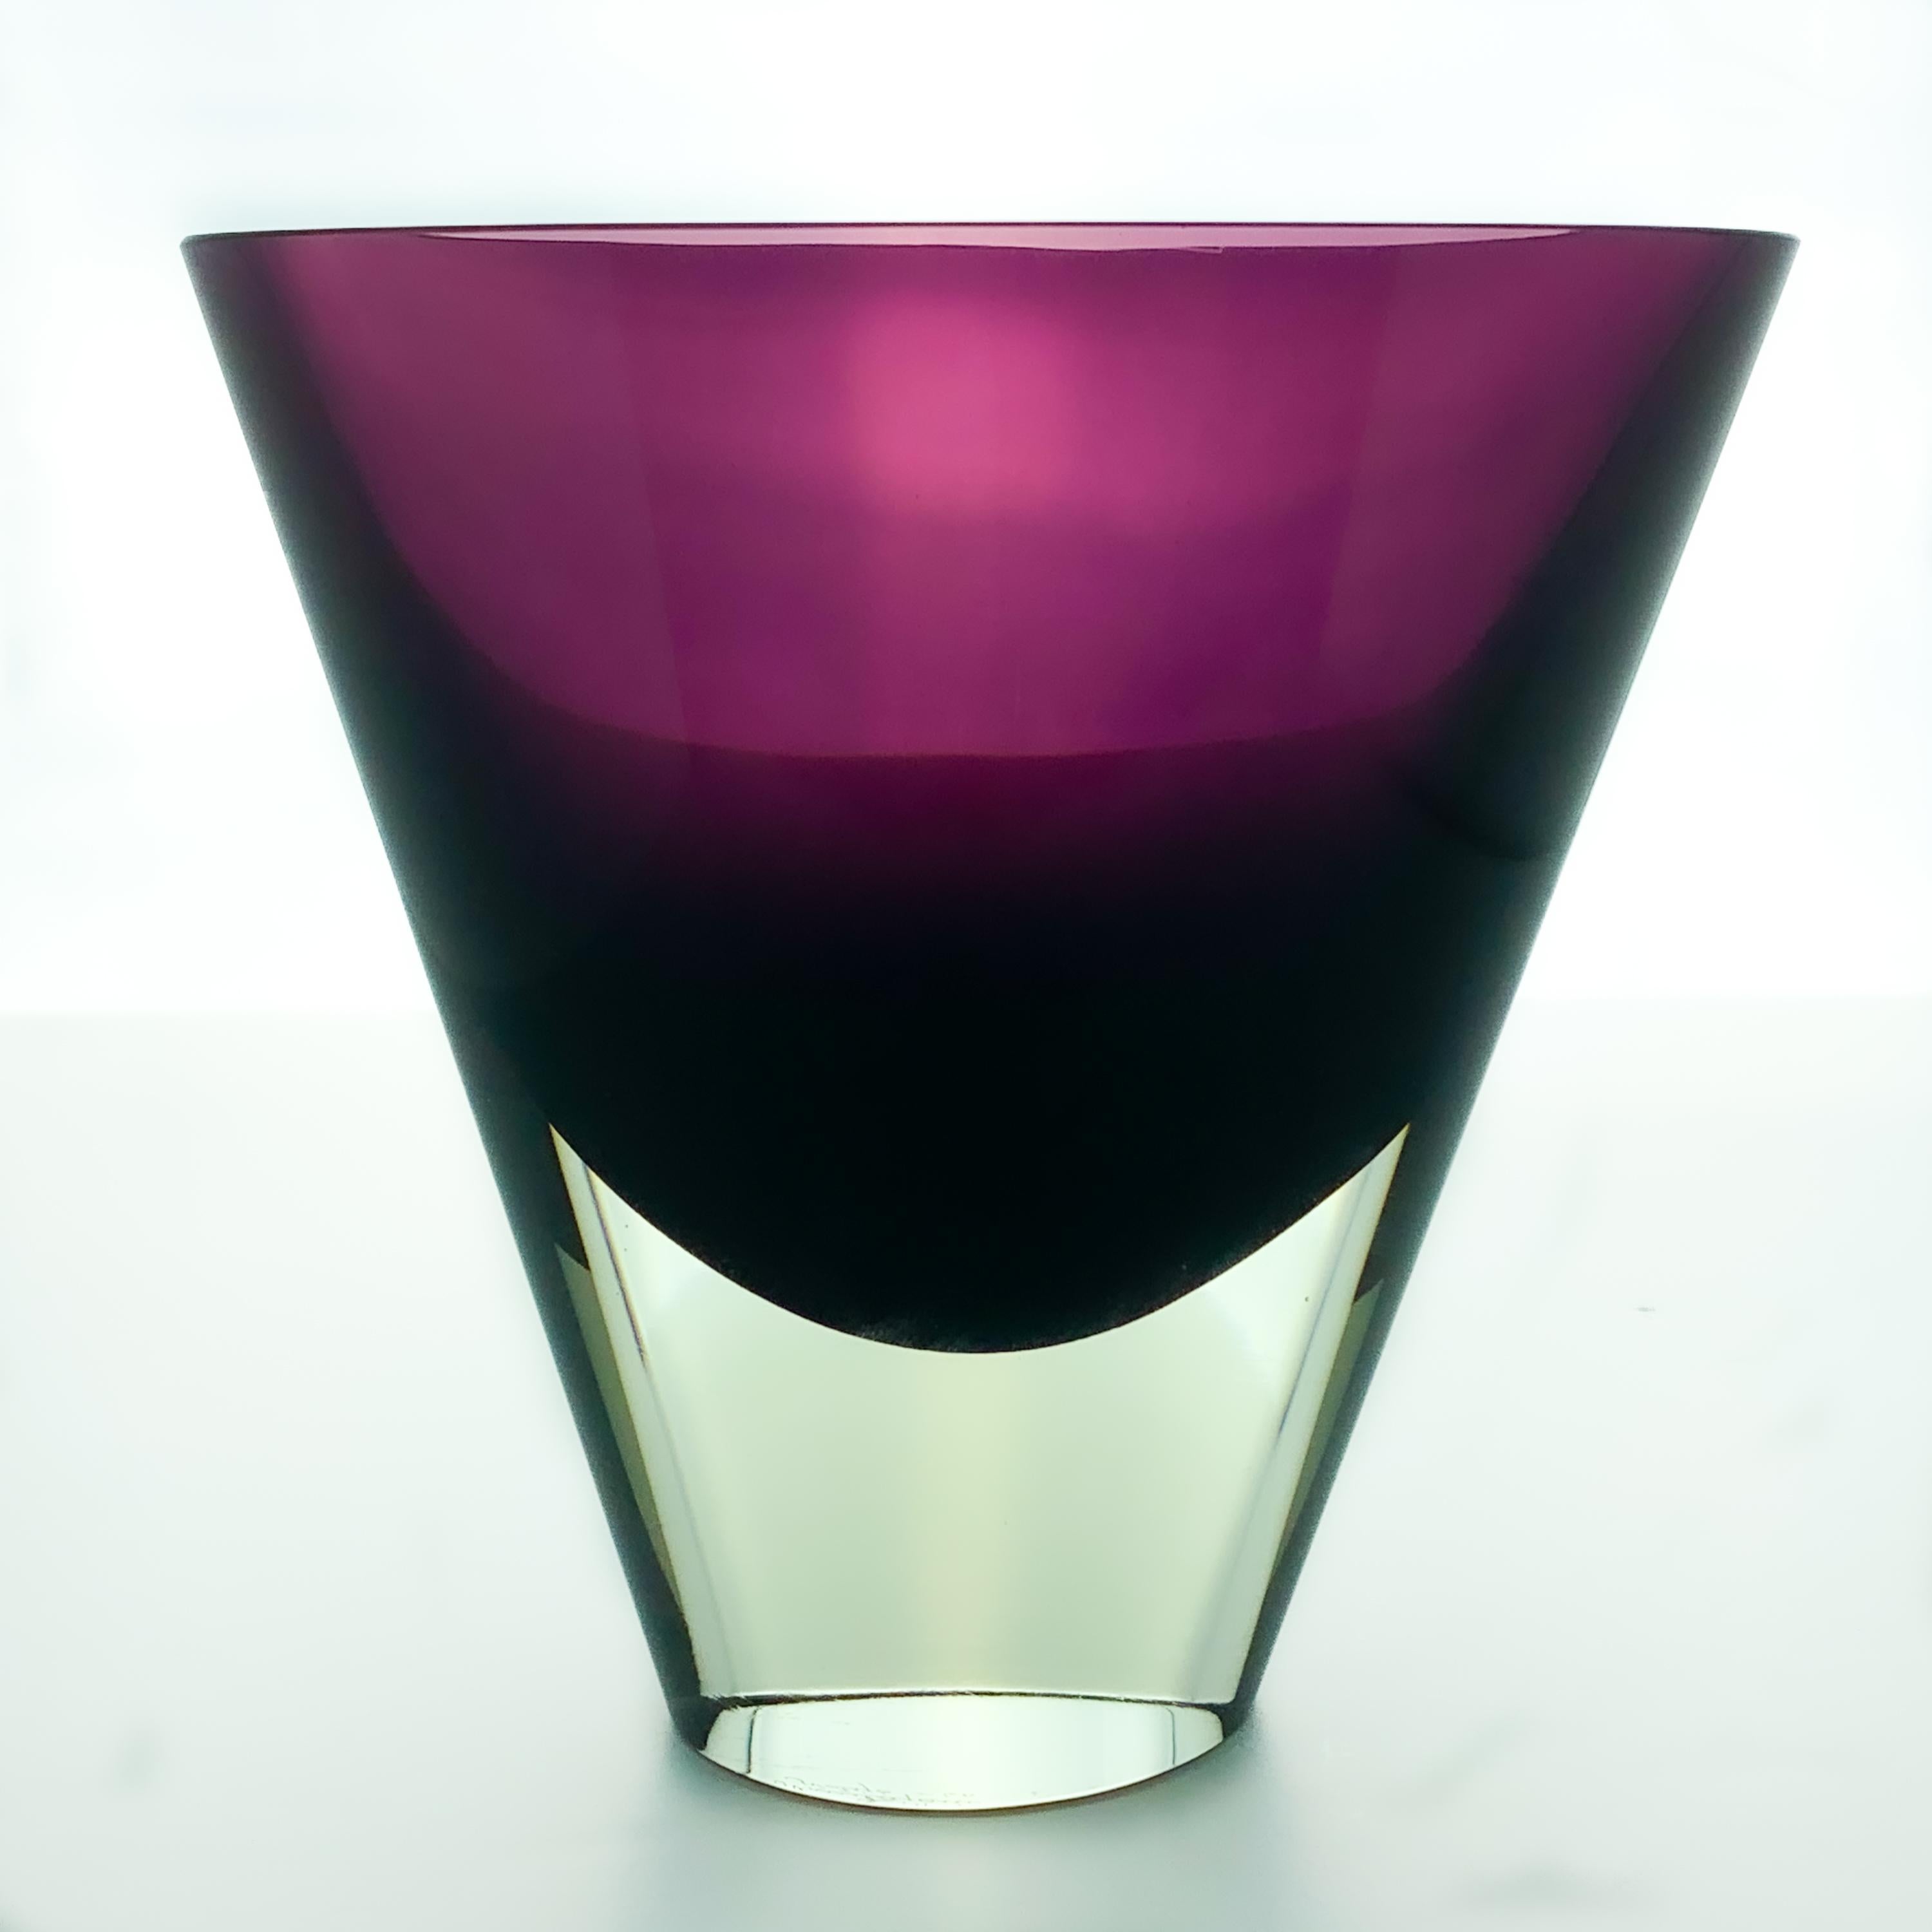 Kaj Franck – Clear and purple glass Art object / Vase – Nuutajärvi-Notsjö glassworks, 1960

Artist
Kaj Franck (Vyborg, Finland 1911 – Santorini, Greece 1989) was an influential Finish designer and leading figure in Finish art-world between